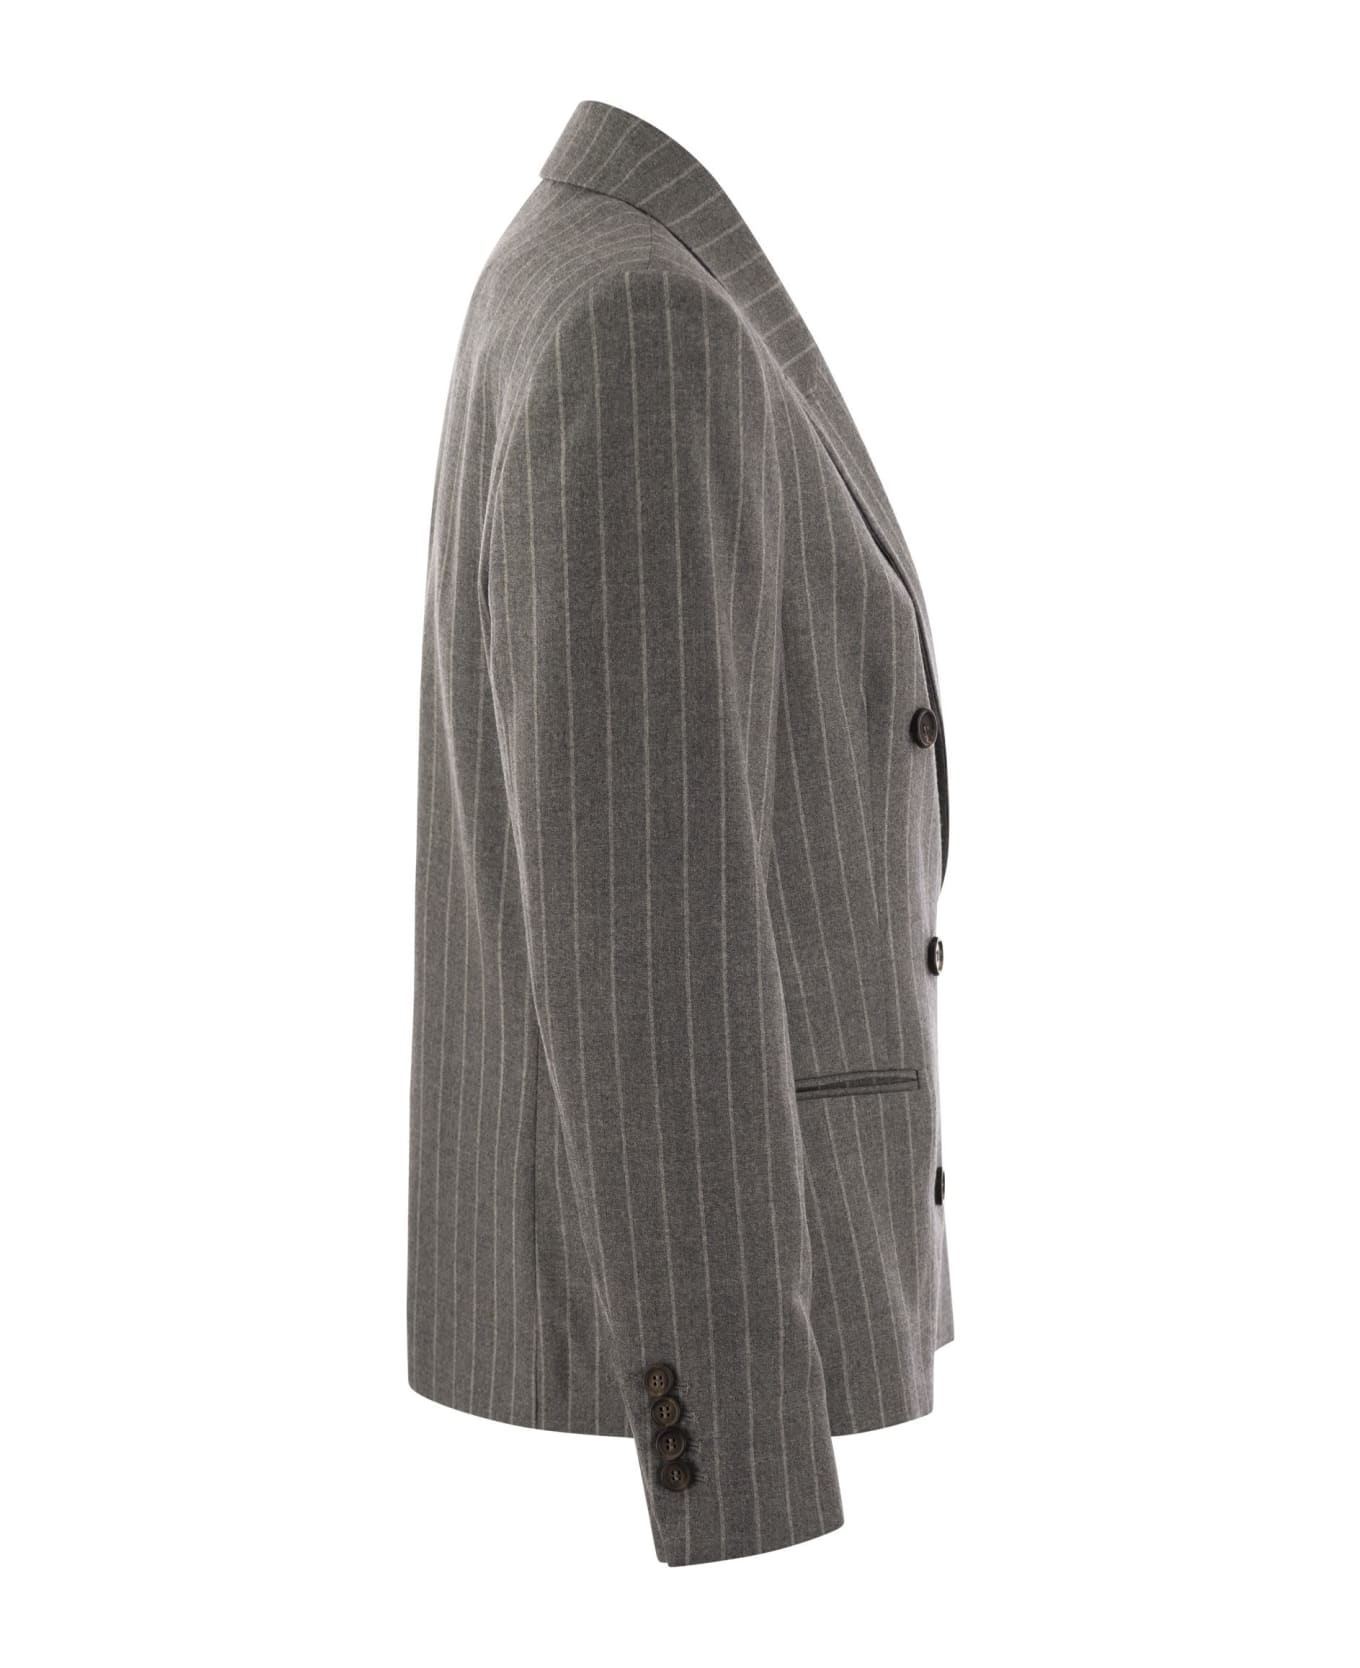 Brunello Cucinelli Virgin Wool Mouliné Pinstripe Jacket With Beadwork - Grey